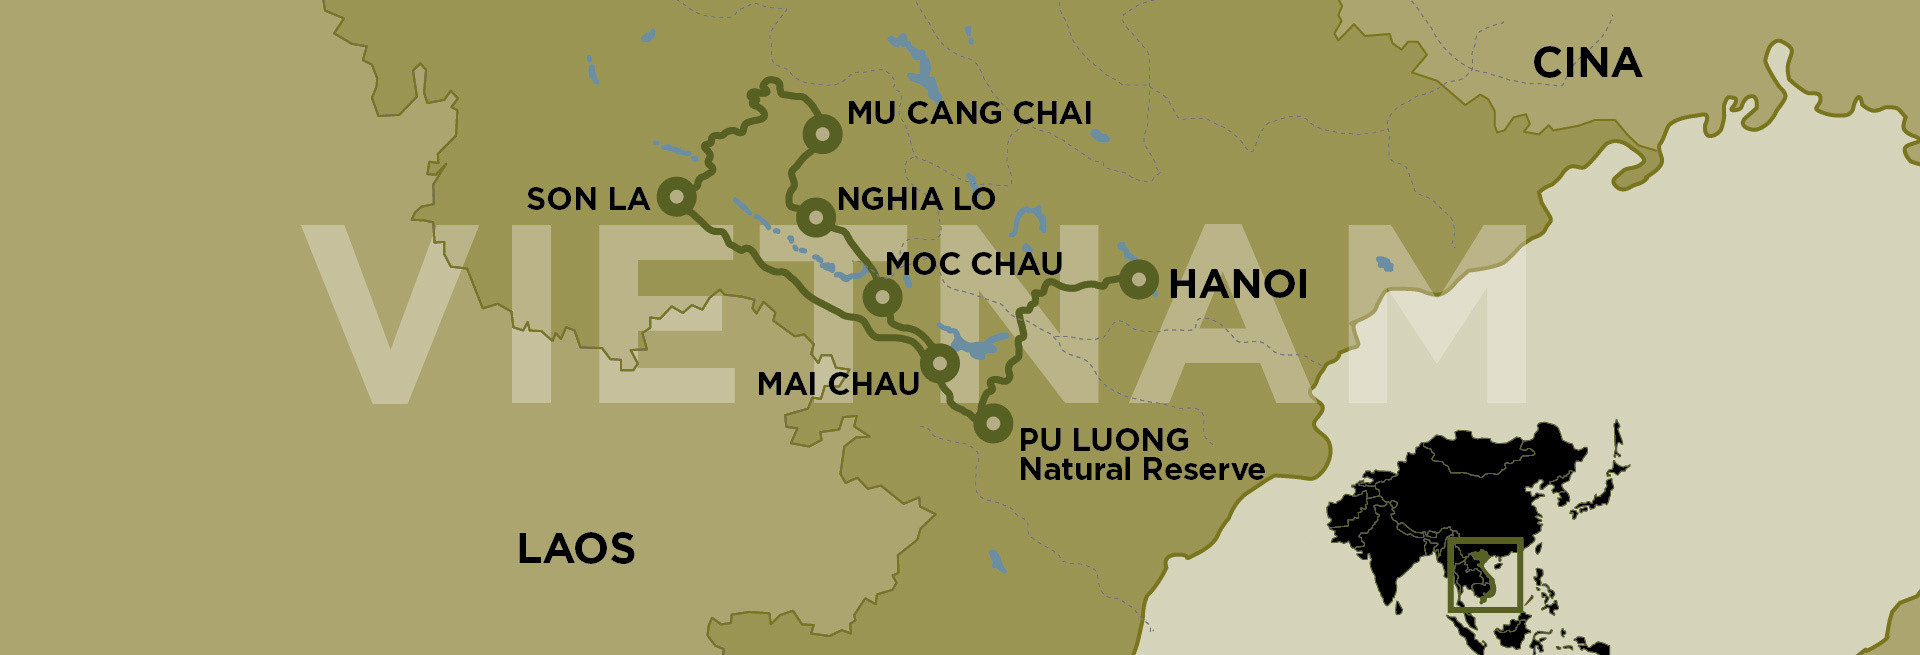 Dainese Experience Vietnam Map